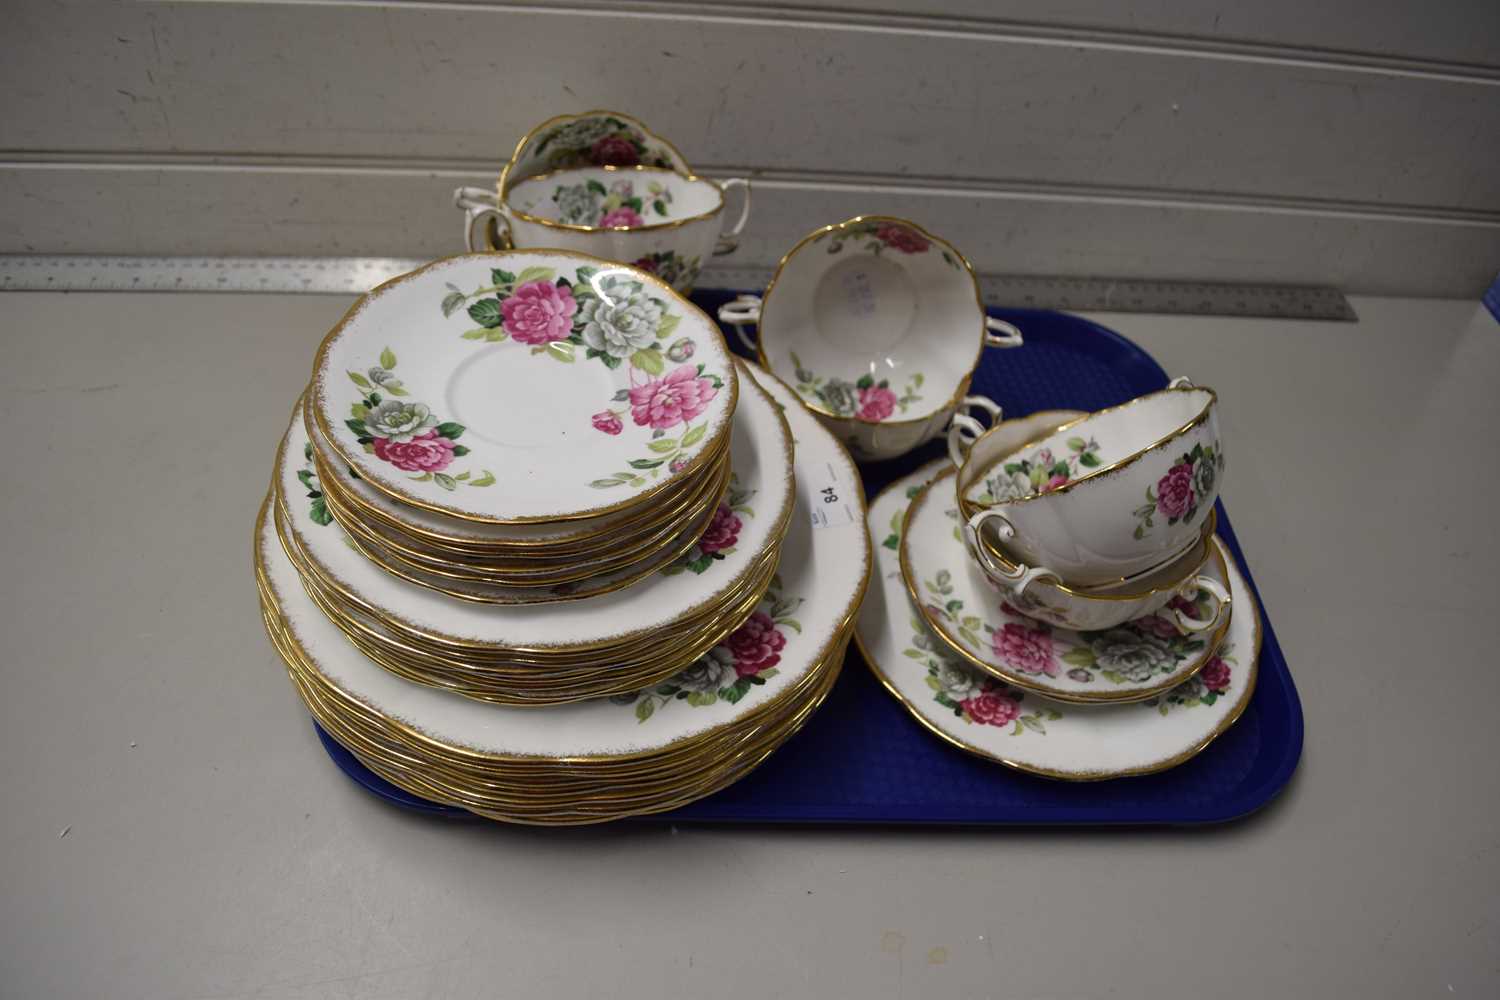 Quantity of Royal Albert Evening Rhapsody table wares